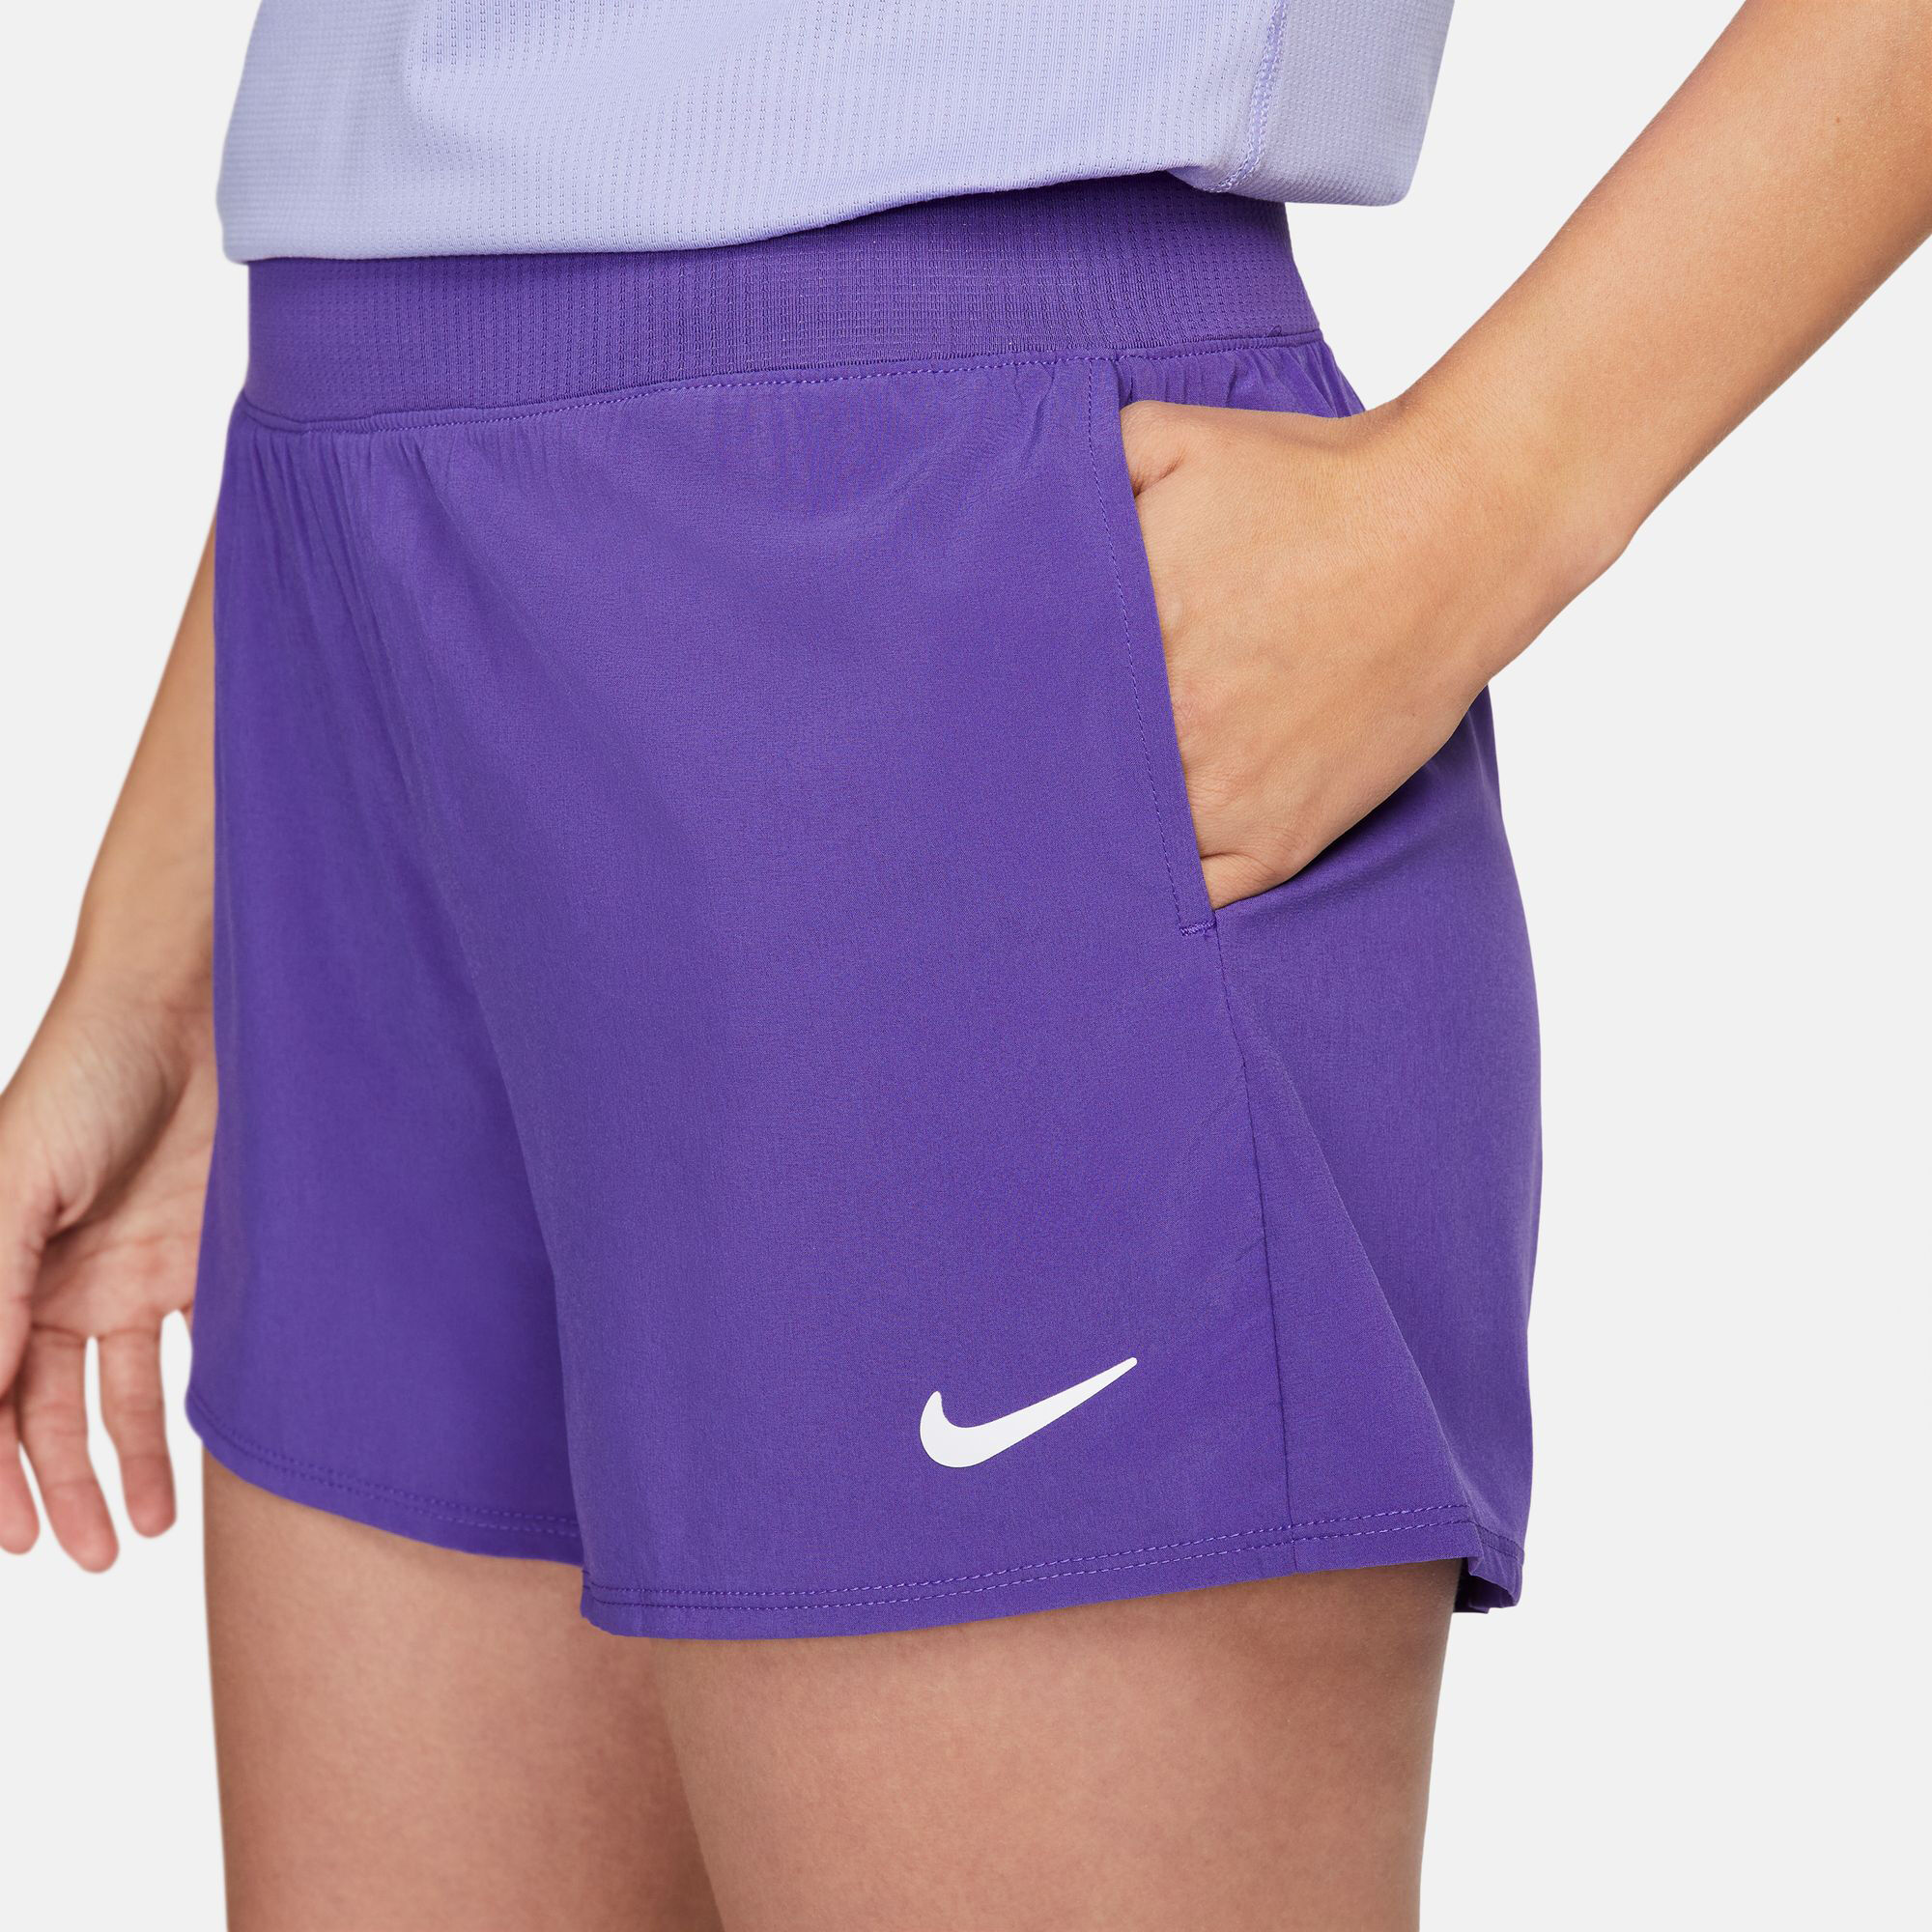 Buy Nike Court Victory Flex Shorts Women Violet online